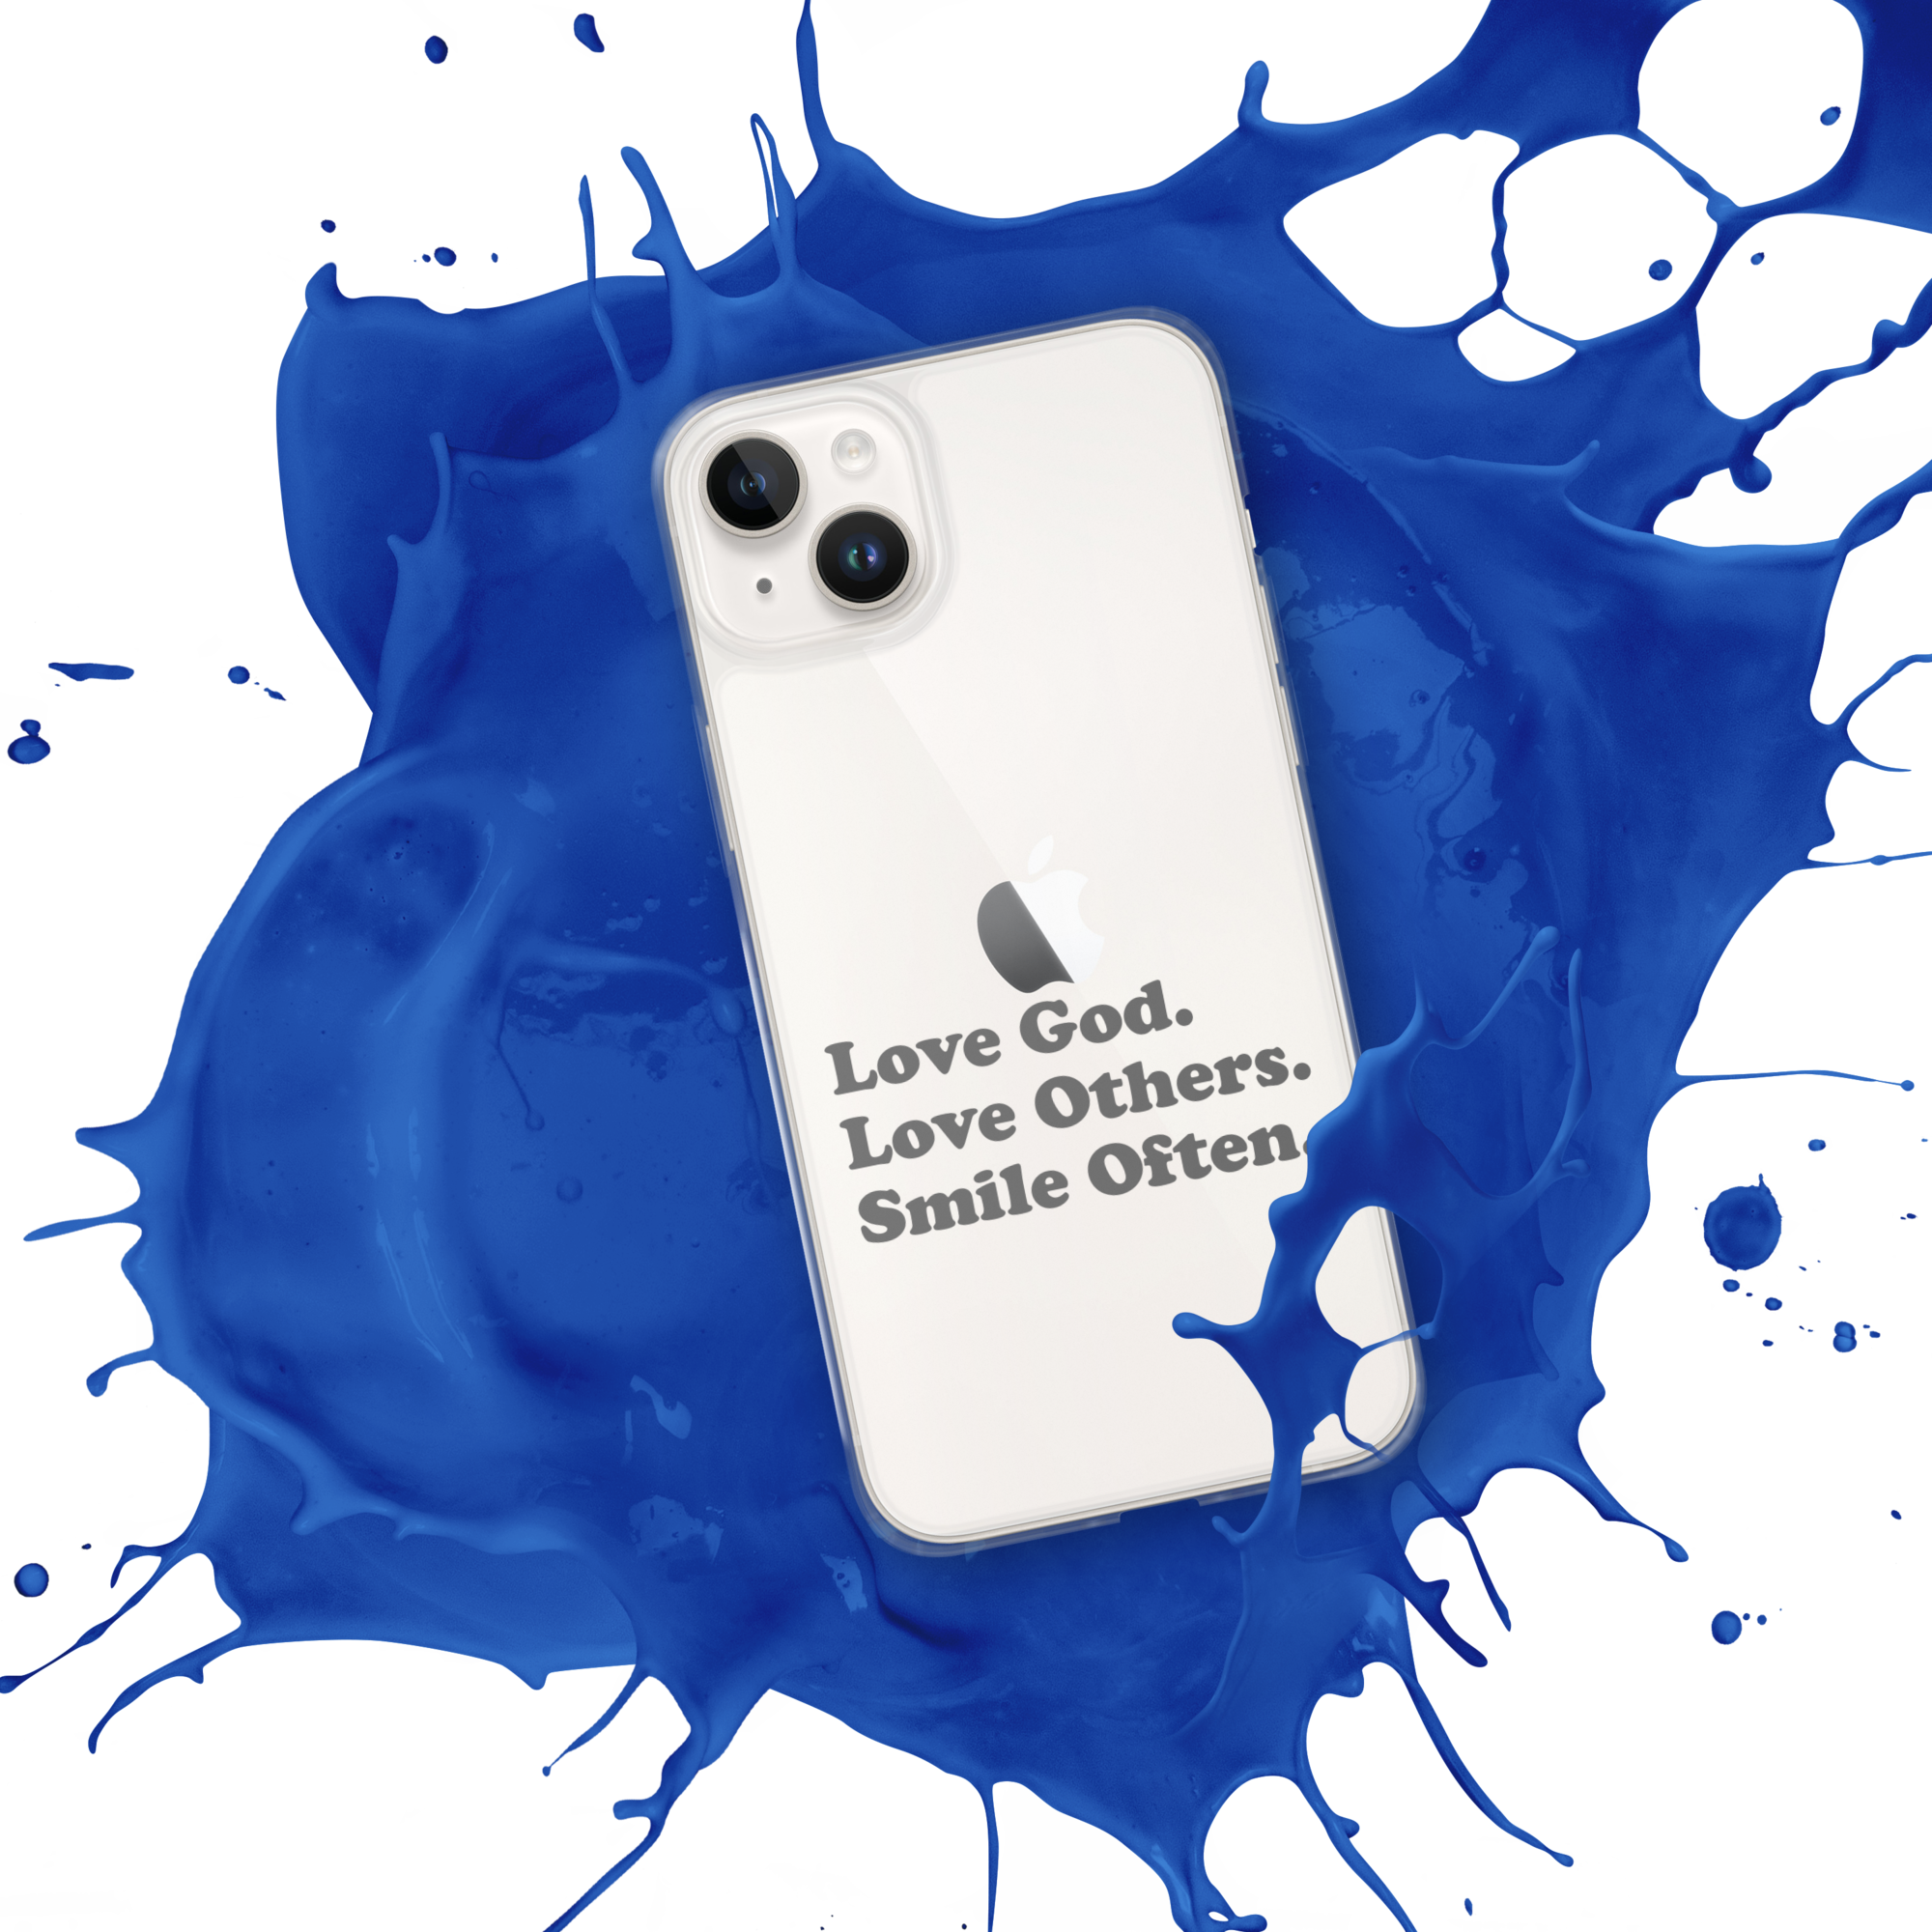 Smile Often iPhone Case